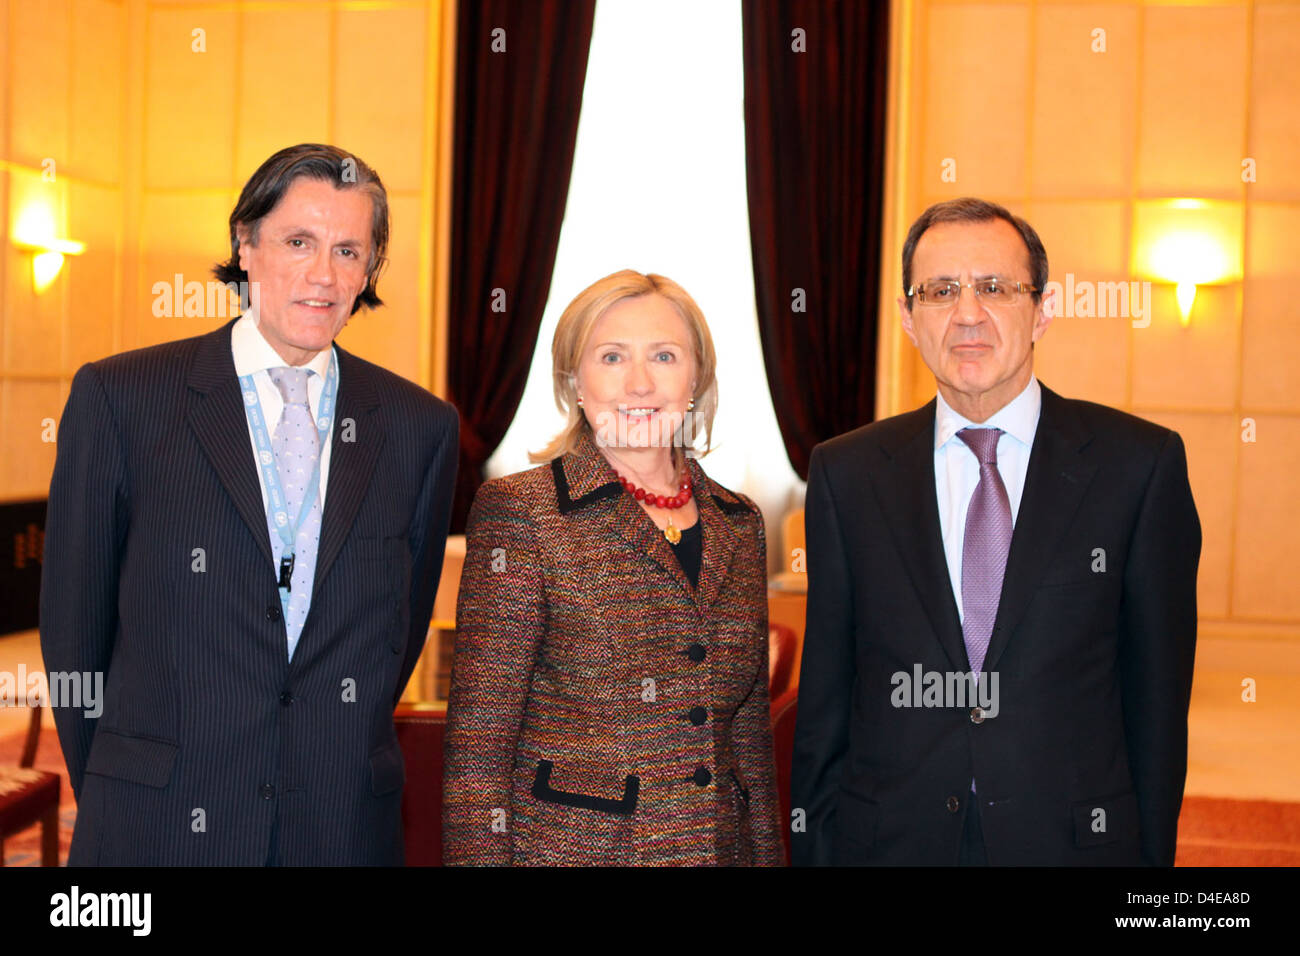 Secretary Clinton Poses for a Photo With UNOG Director-General Ordzhonikidze and Chile Permanent Representative Yuraszeck Stock Photo